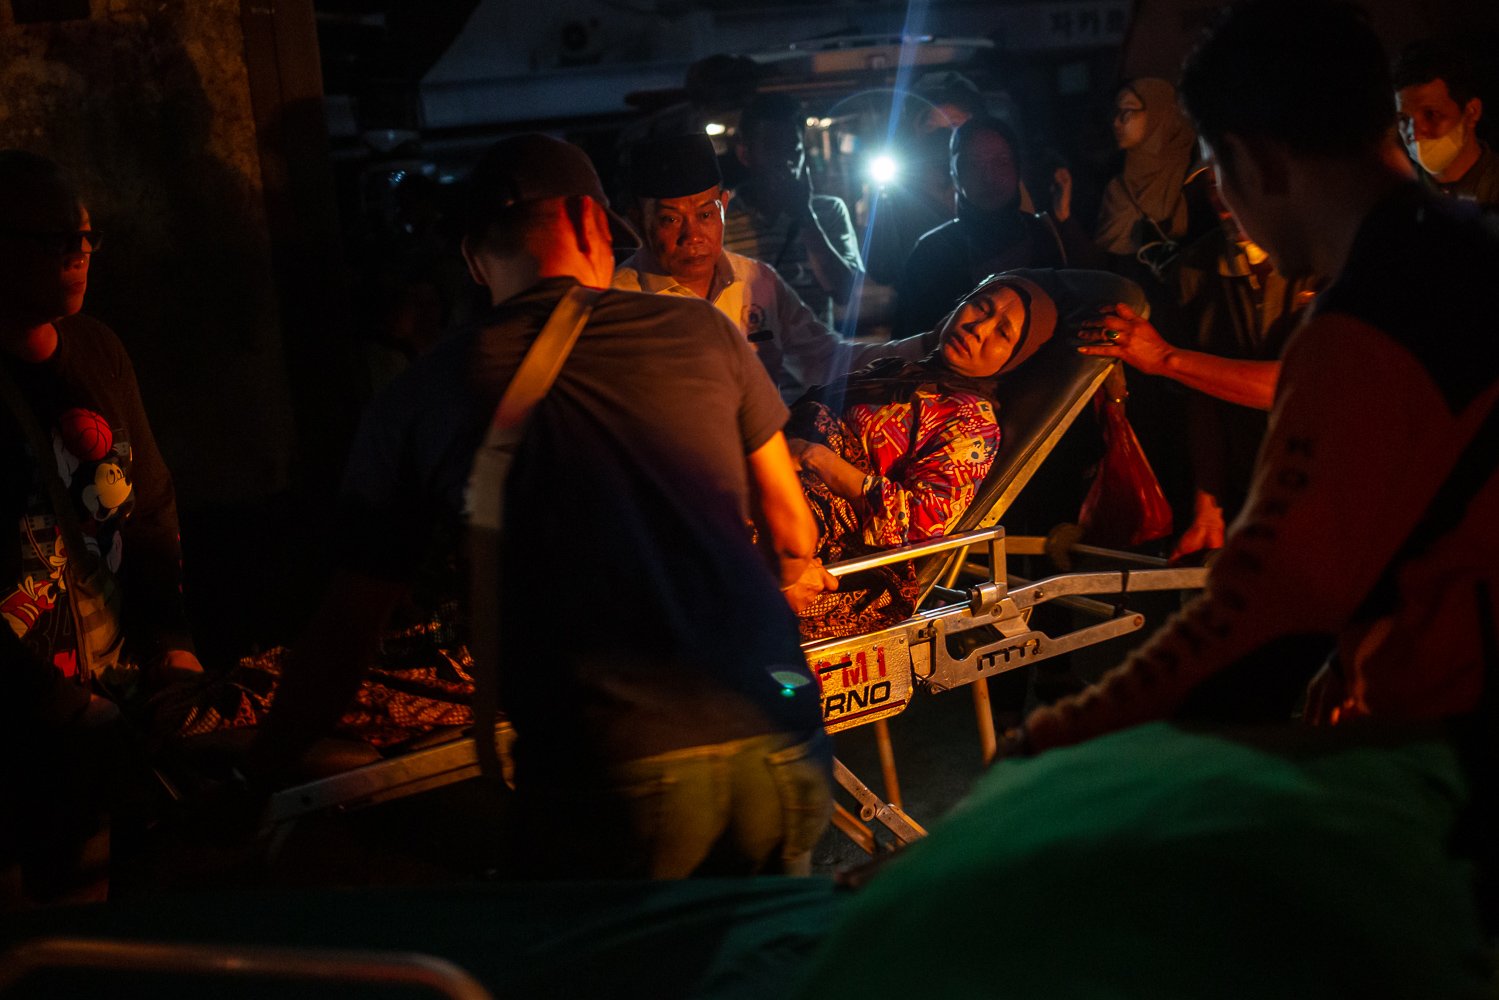 Warga mengevakuasi seorang lansia terdampak kebakaran di Jalan Simprug Golf II, Kebayoran Lama, Jakarta, Minggu (21/8). Akibat peristiwa tersebut 1 orang meninggal dunia diduga akibat kaget dan kelelahan. Selain itu, sebanyak 383 jiwa dari 164 KK harus mengungsi di tenda darurat.